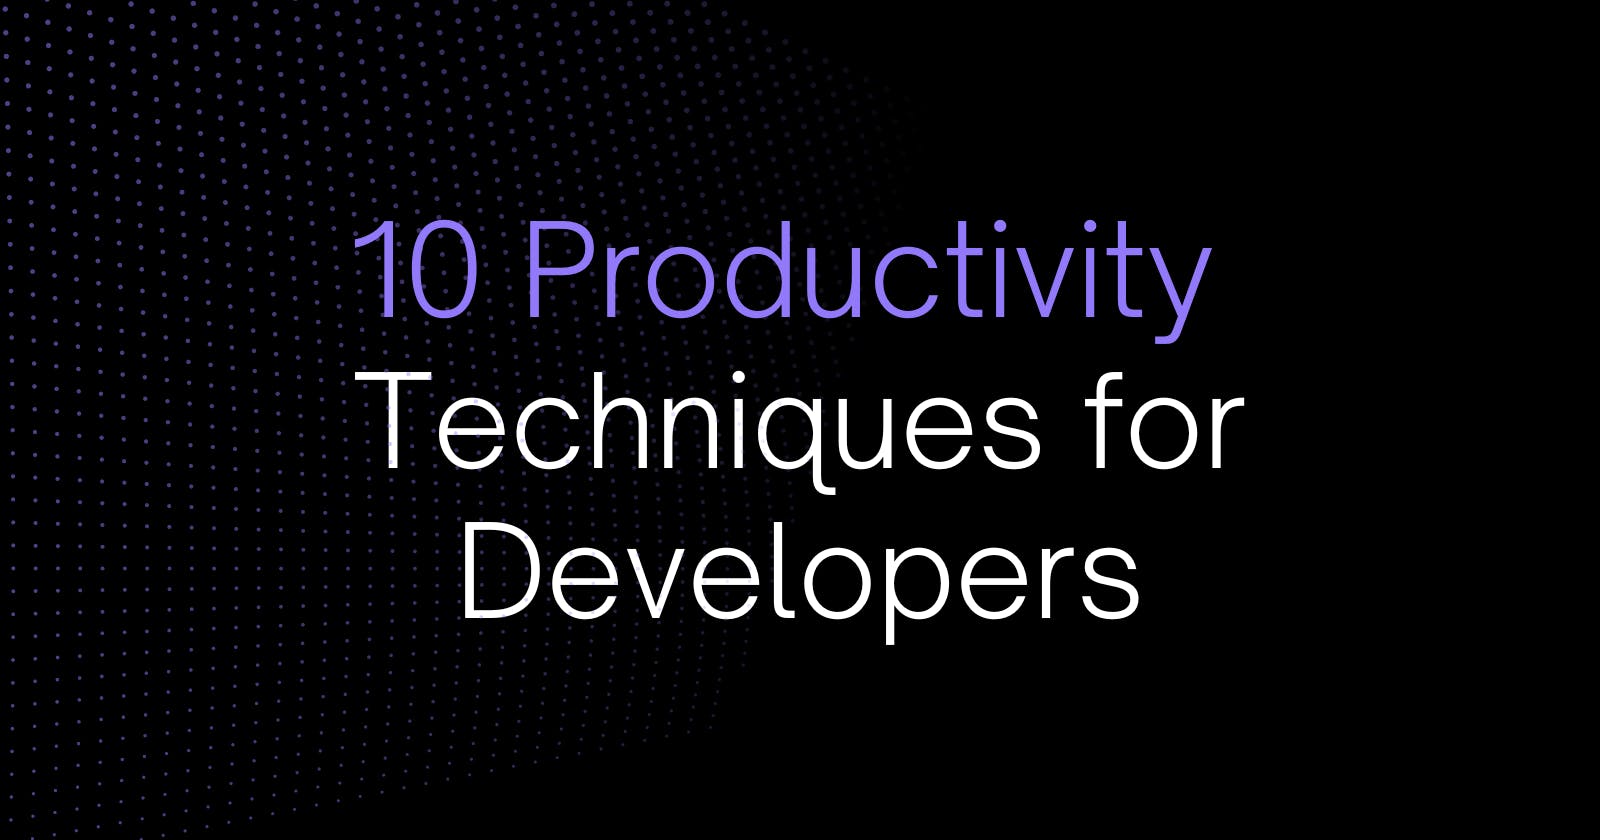 10 Productivity Techniques for Developers